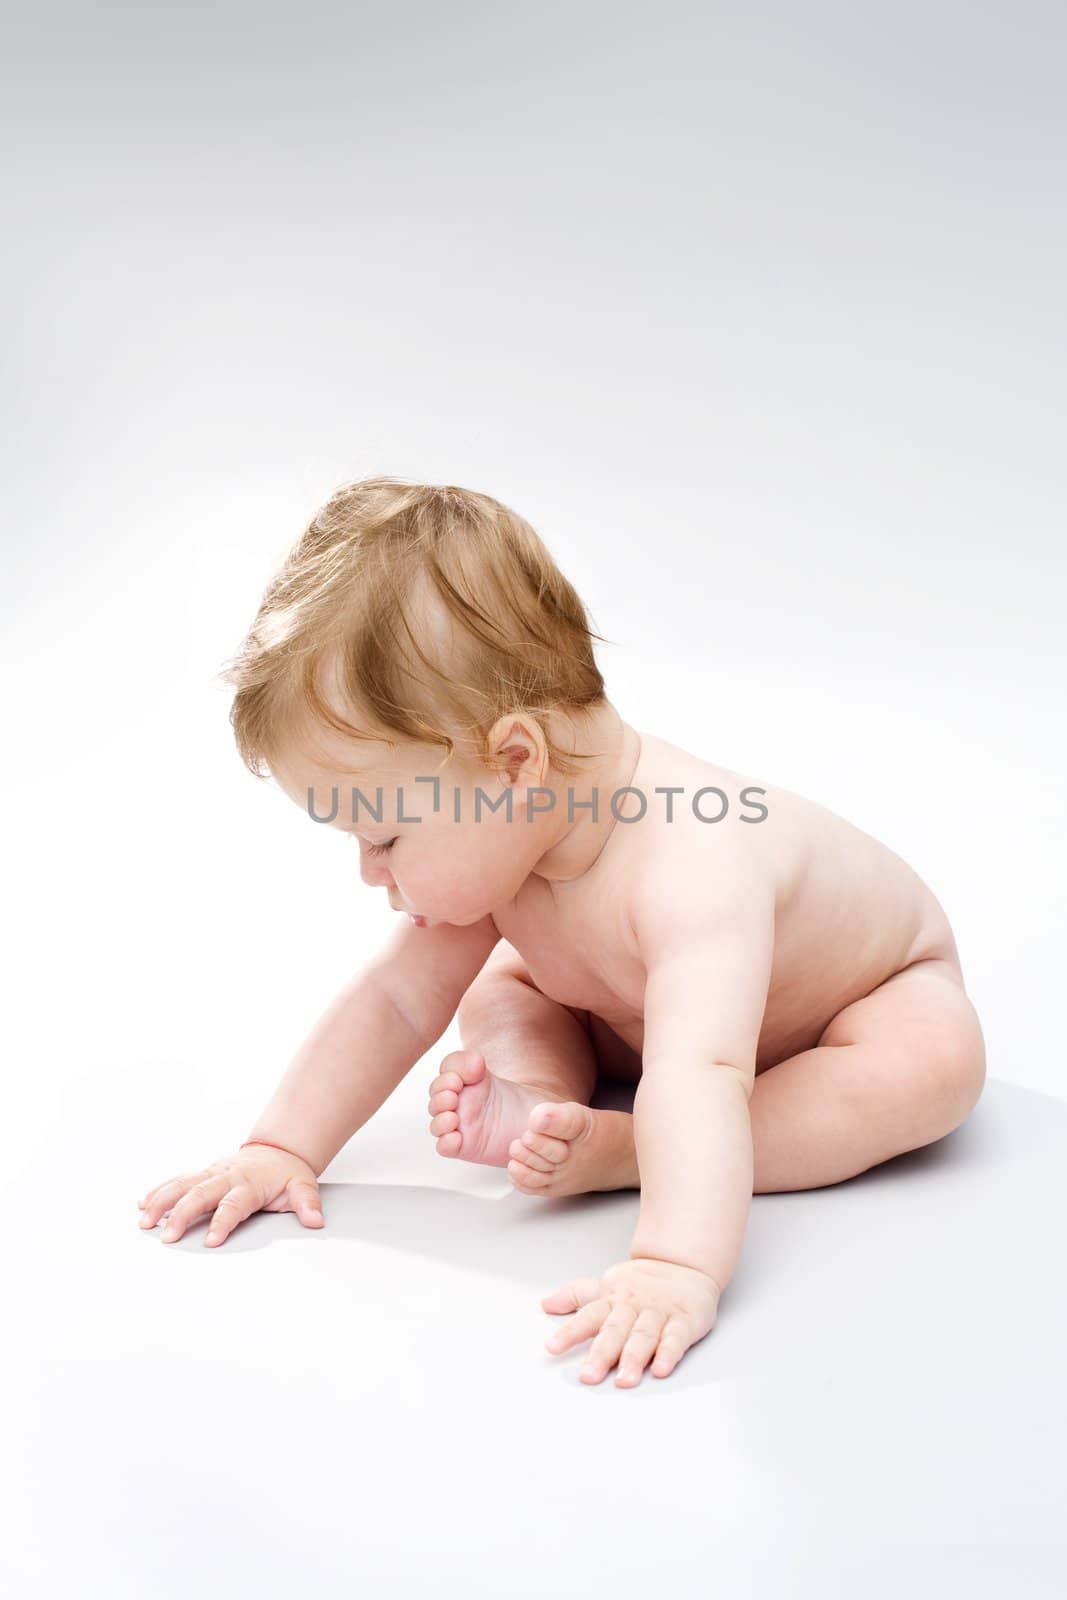 shild series: portrait of little baby